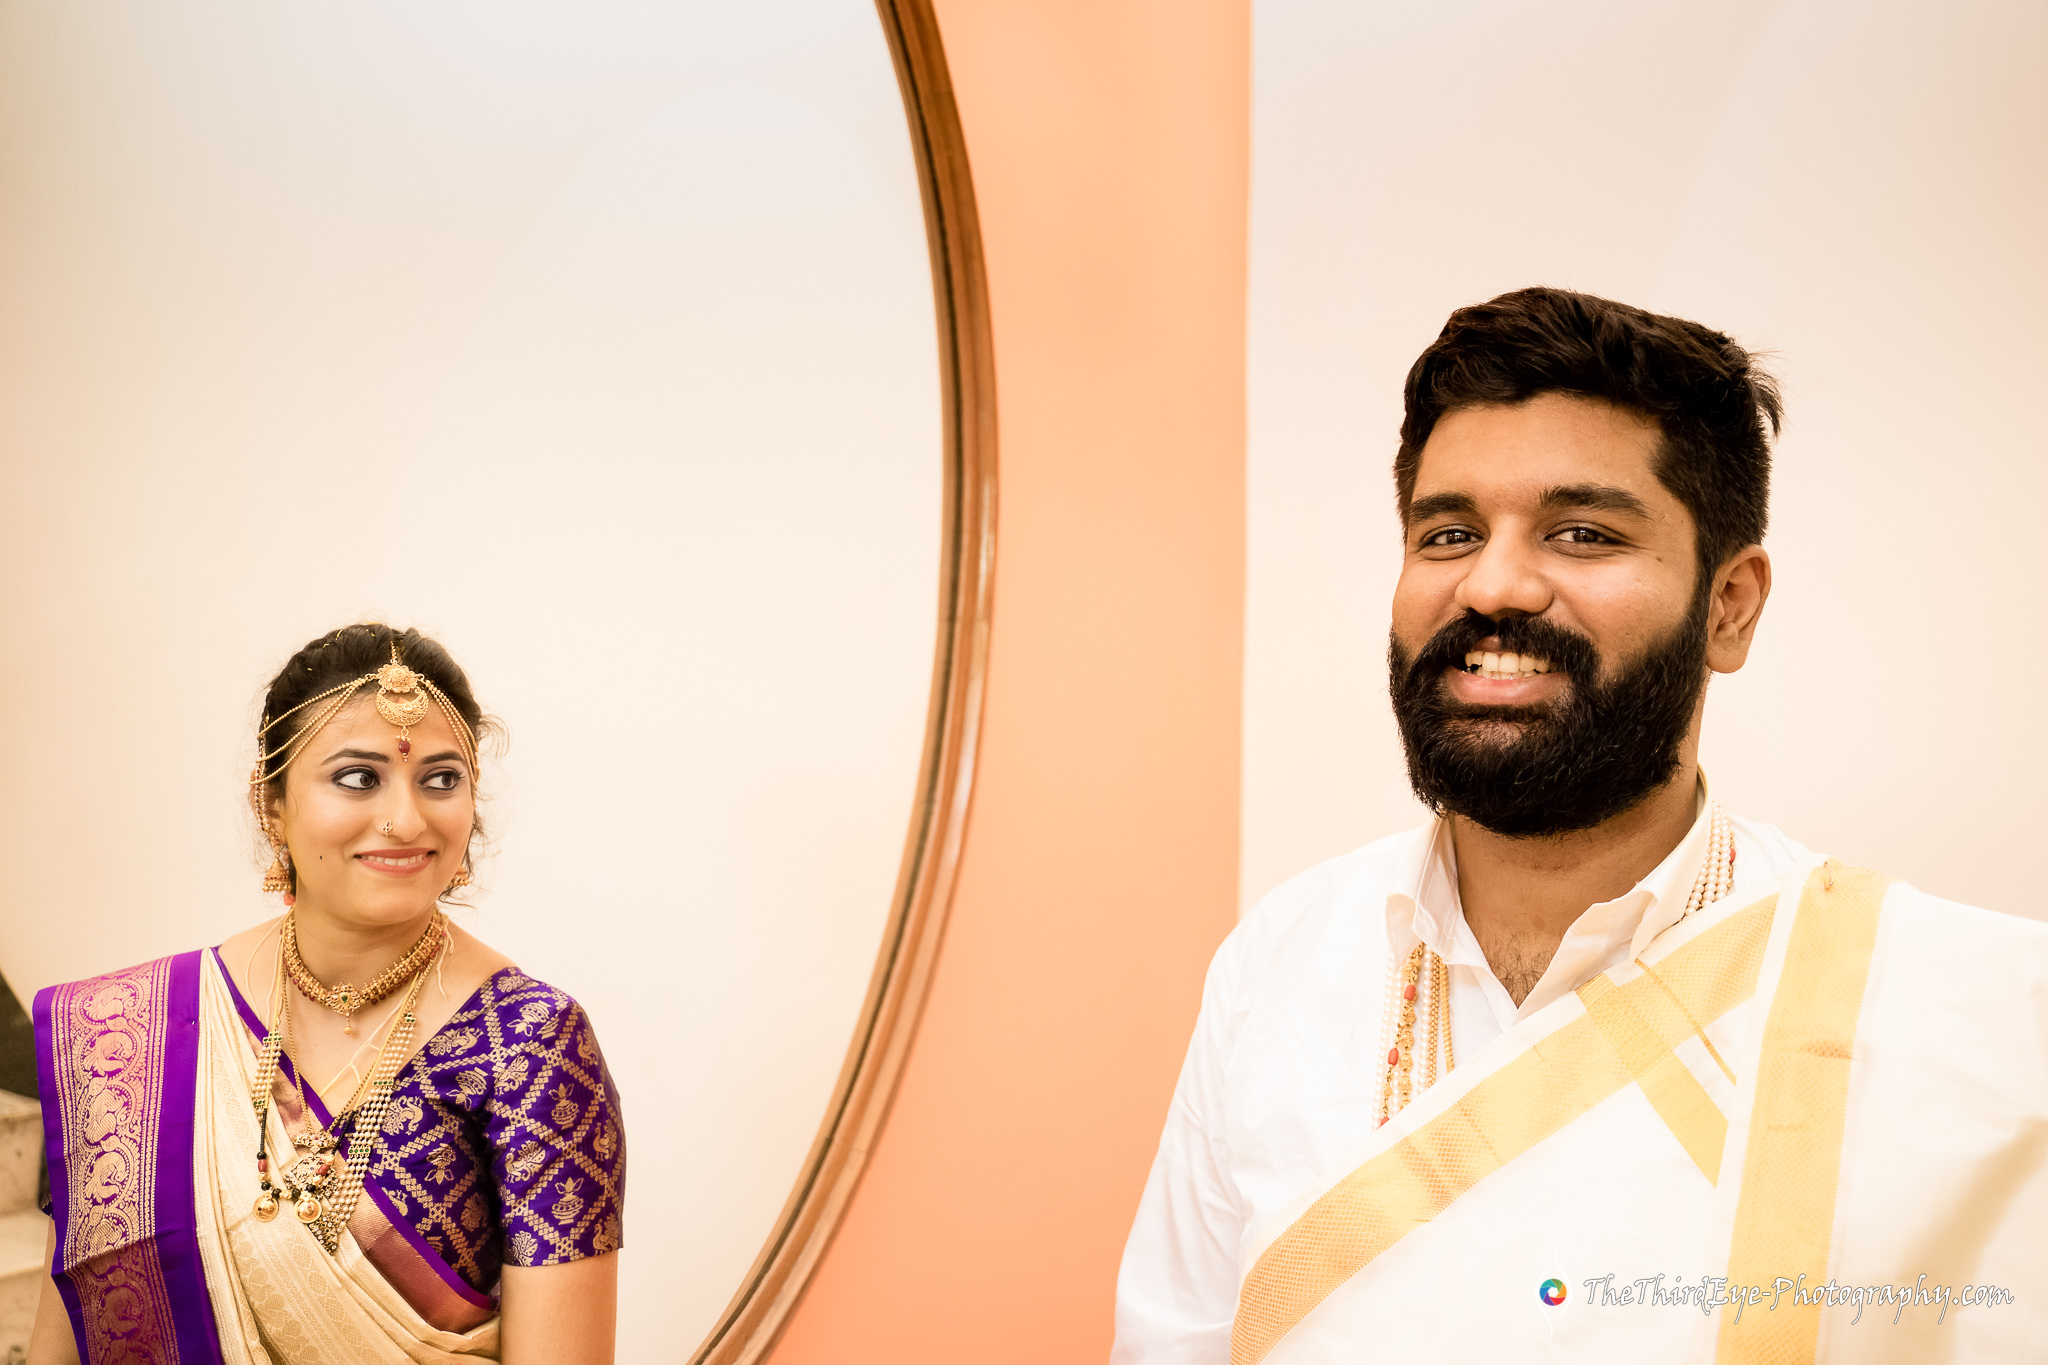 Bride-bridegroom-couple-love-moment-attire-smiles-portrait-prewedding-happy-smile-pose-Best-mirror-indian-Candid-Wedding-photographer-Covid-19-Corona-quarantine-TTEP_CM_A7009671-Edit